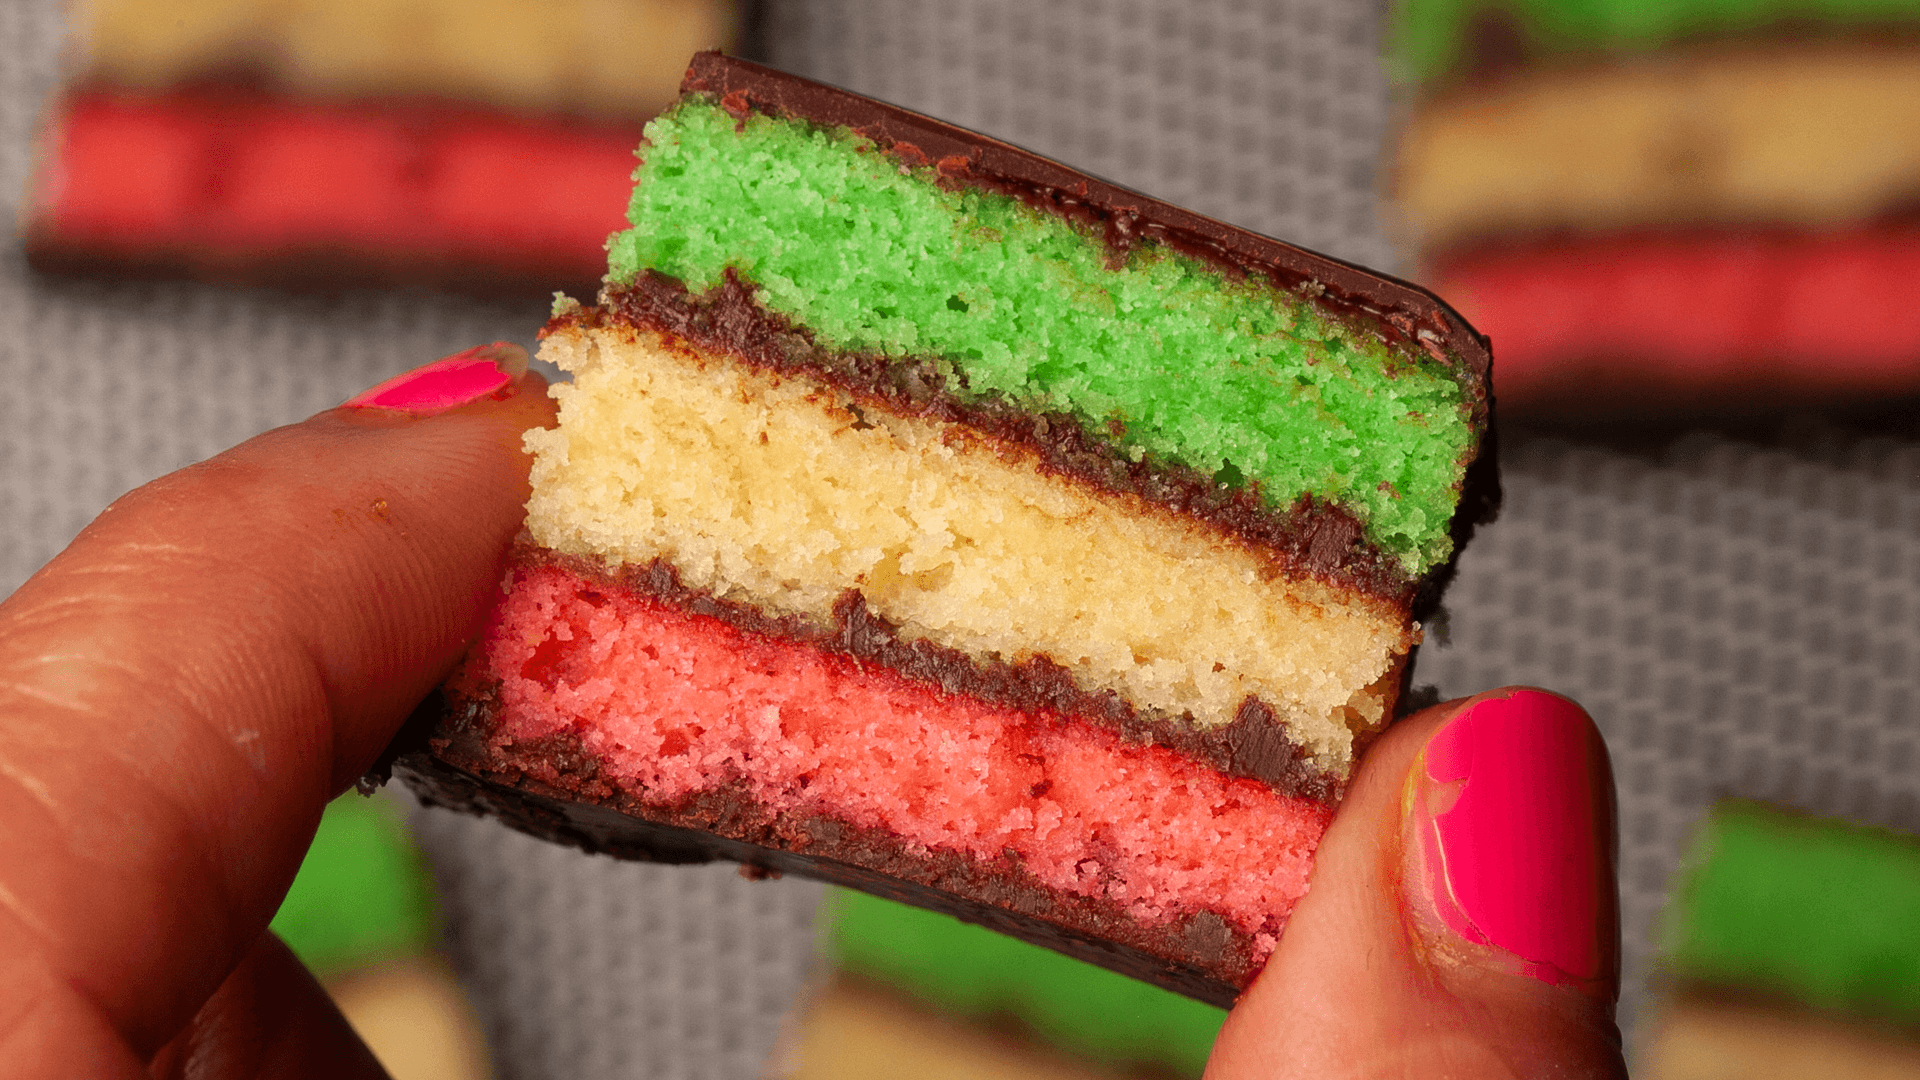 Italian Rainbow Cookie Cake